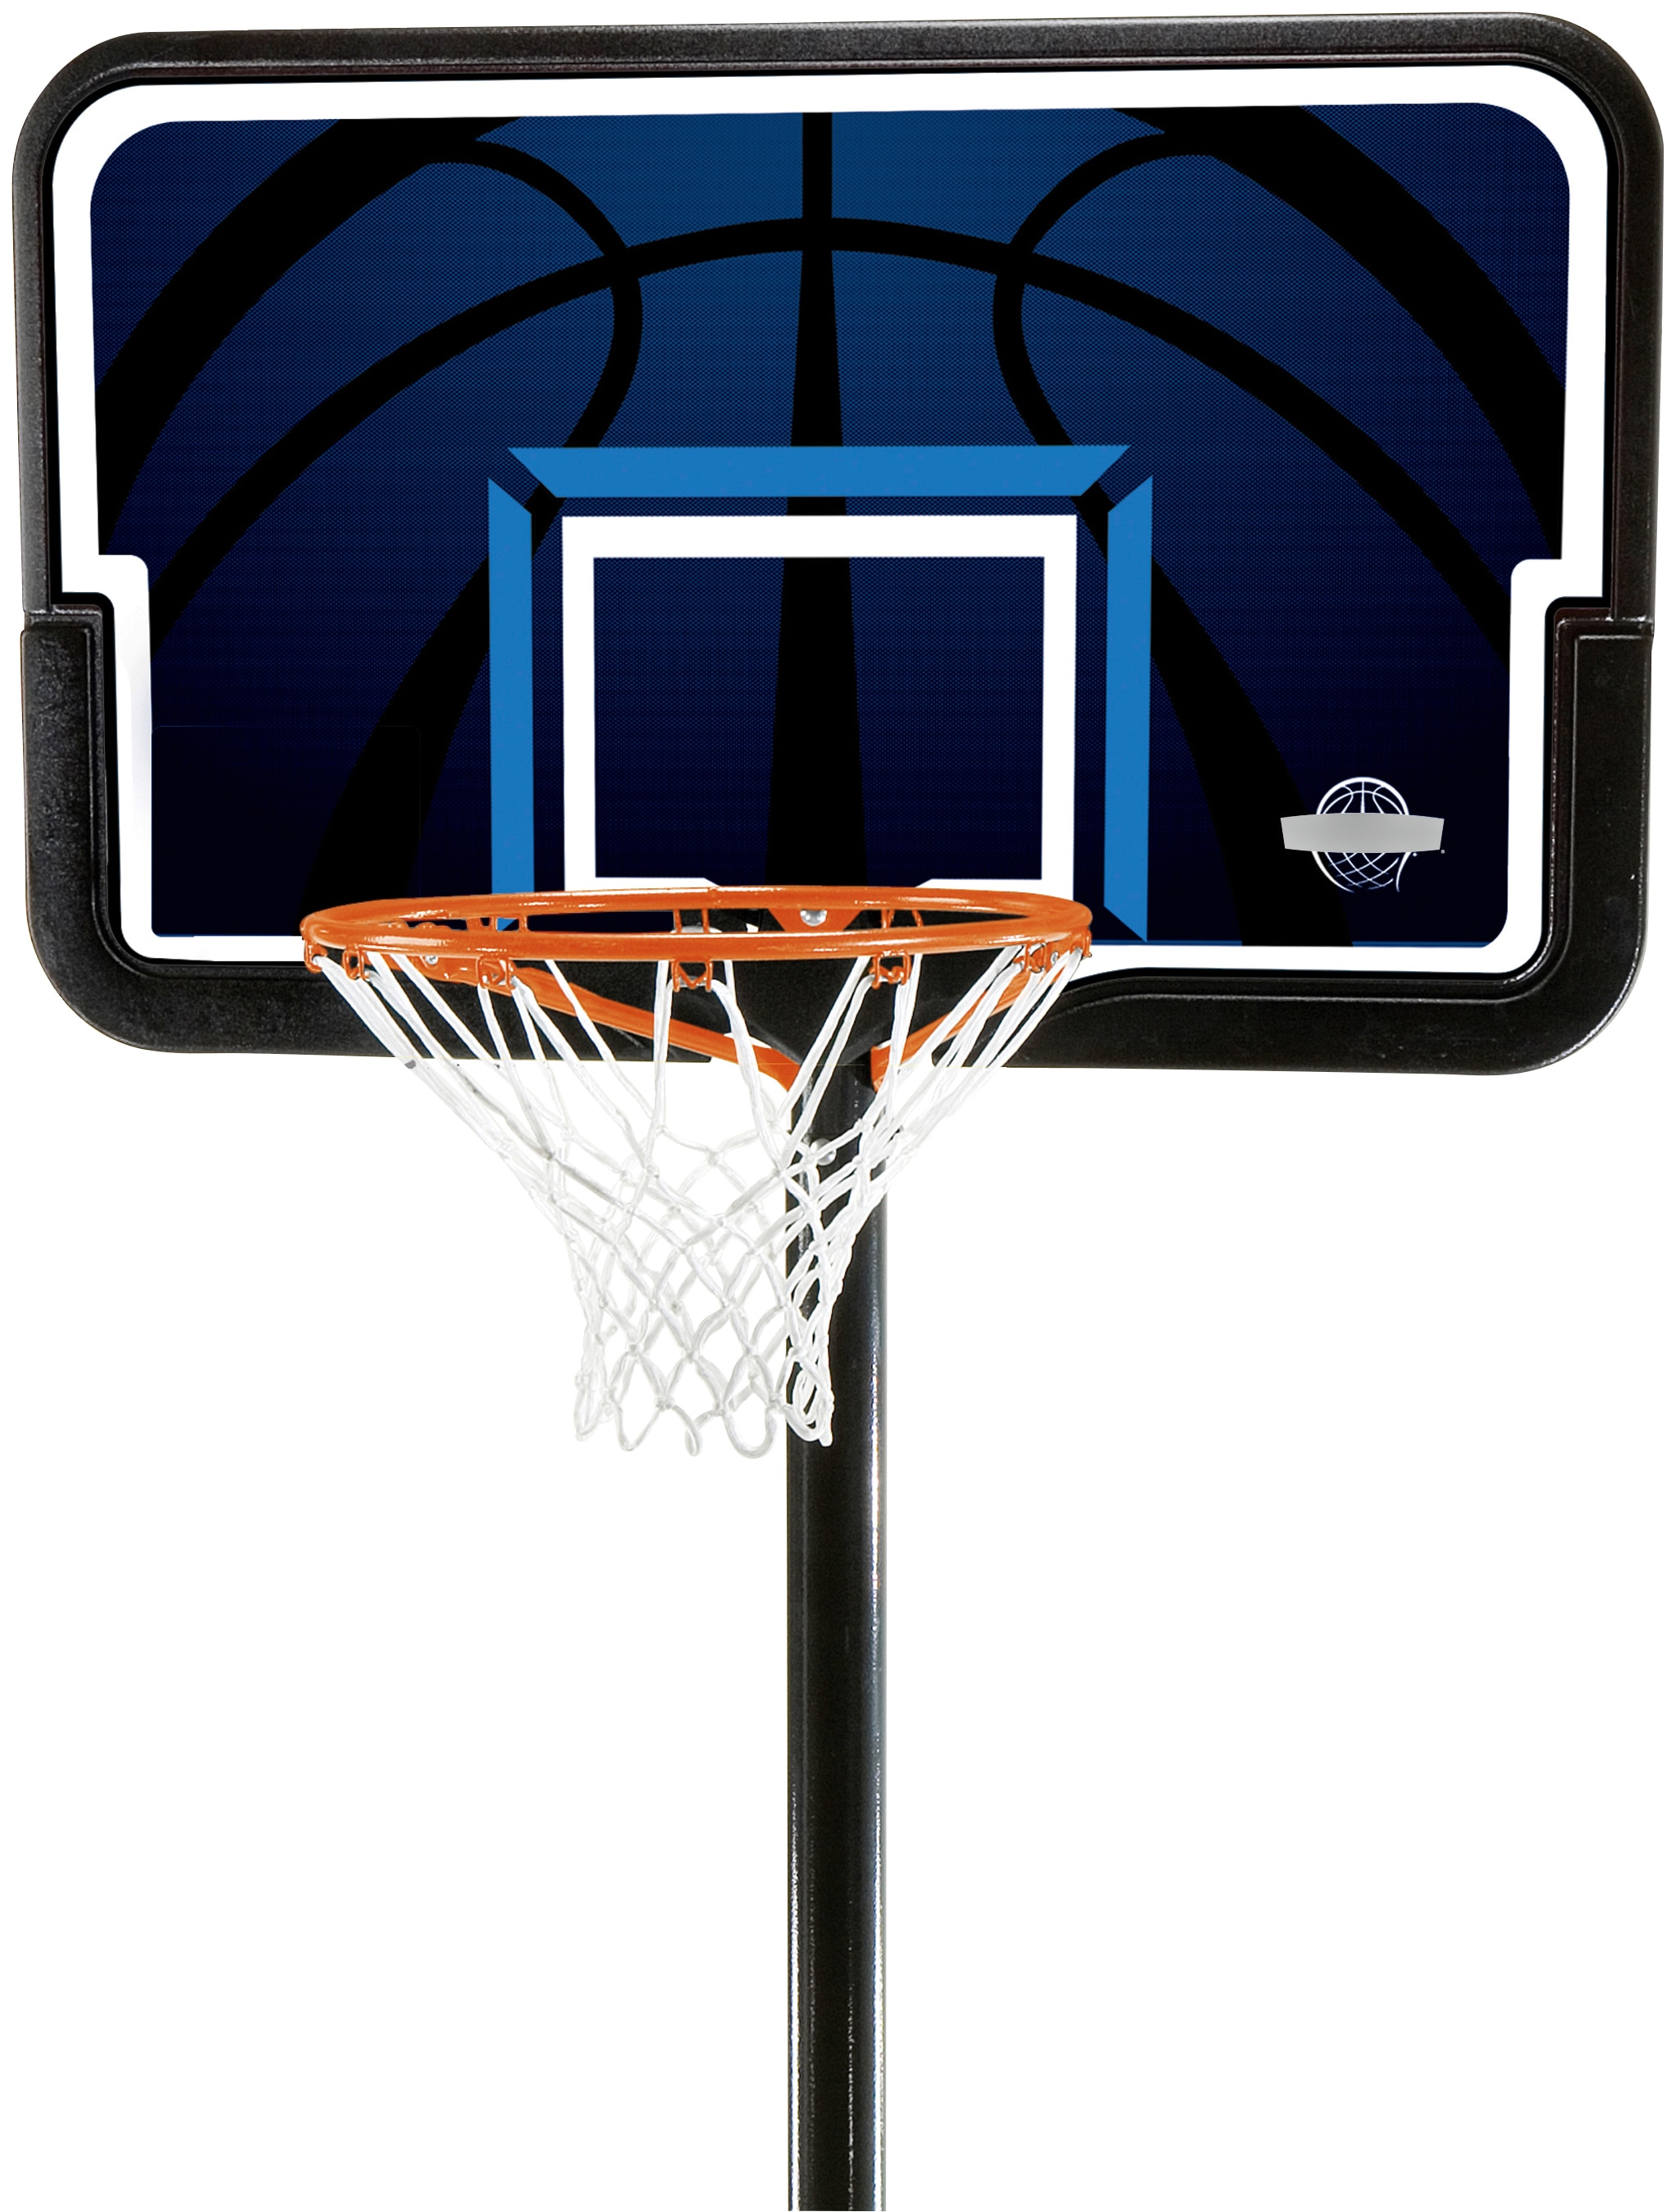 50NRTH BAUR höhenverstellbar Basketballkorb schwarz/blau »Nevada«, |